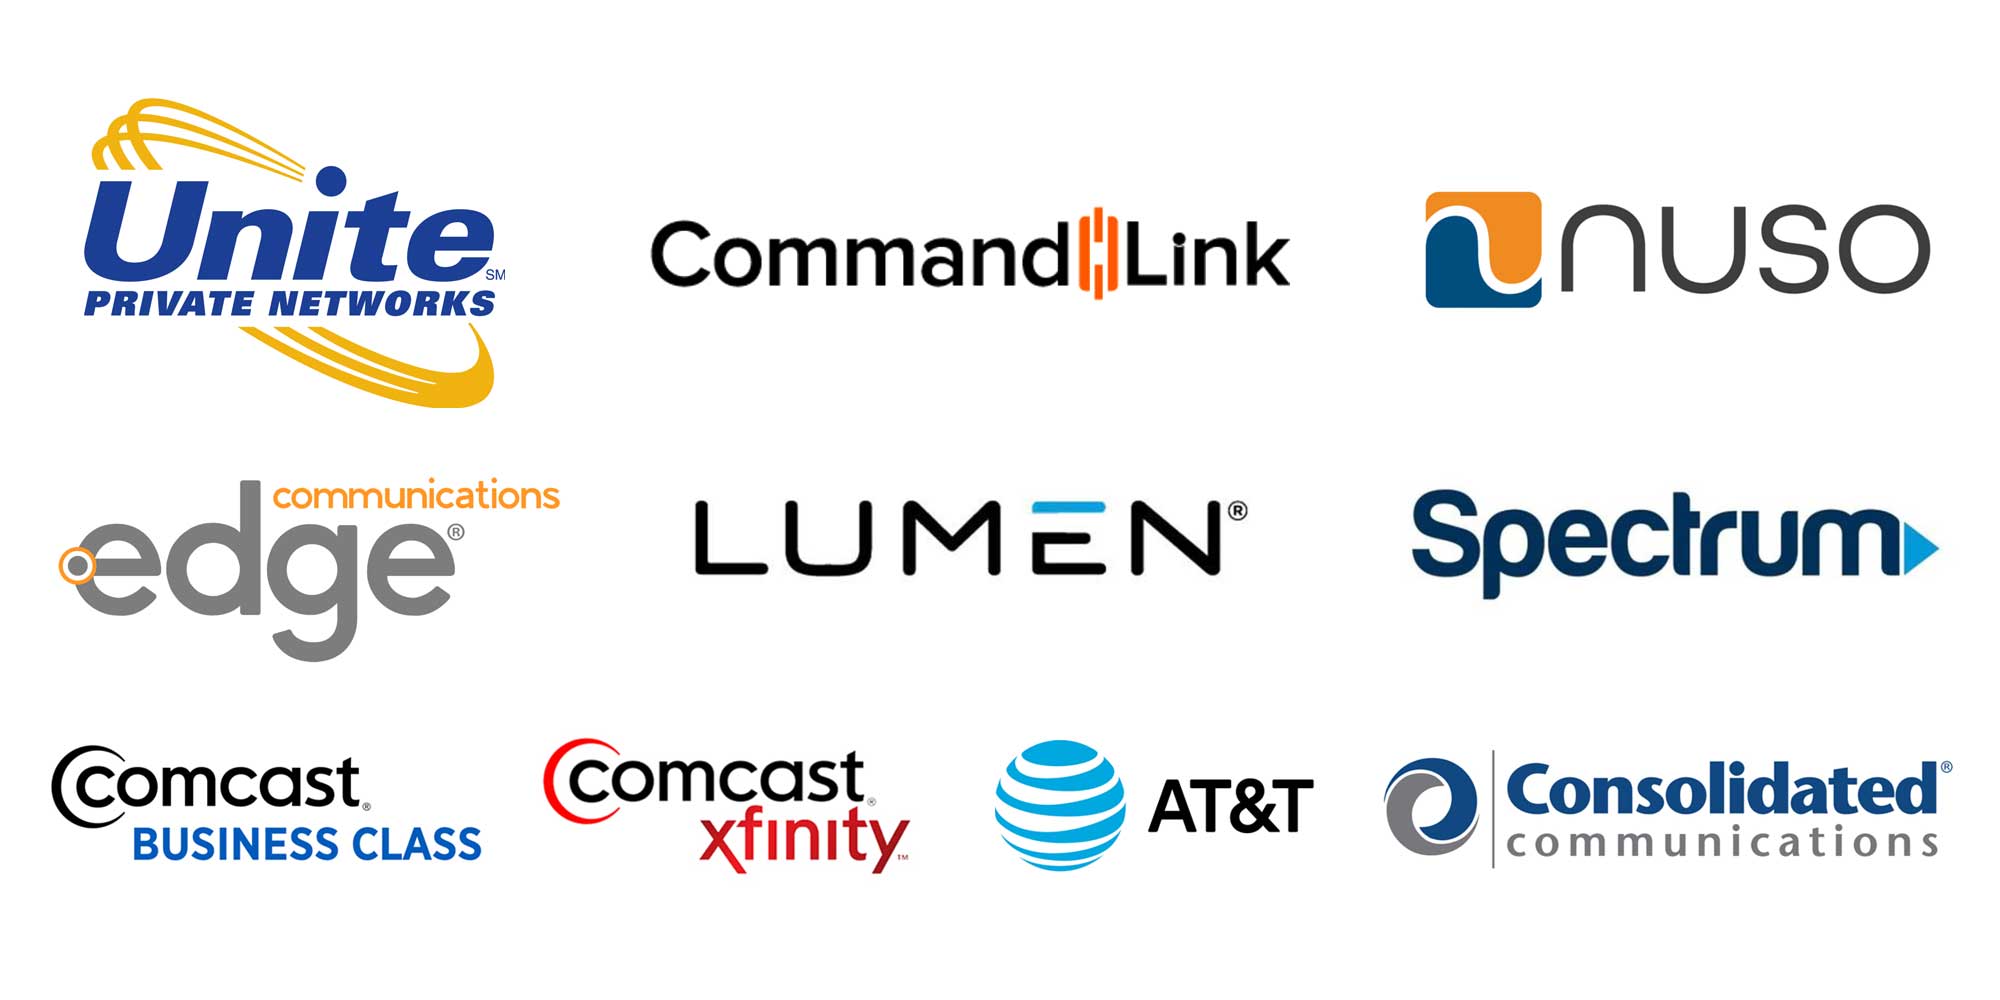 unite-private-networks-command-link-nuso-edge-communications-lumen-spectrum-comcast-att-consolidated-communications.jpg